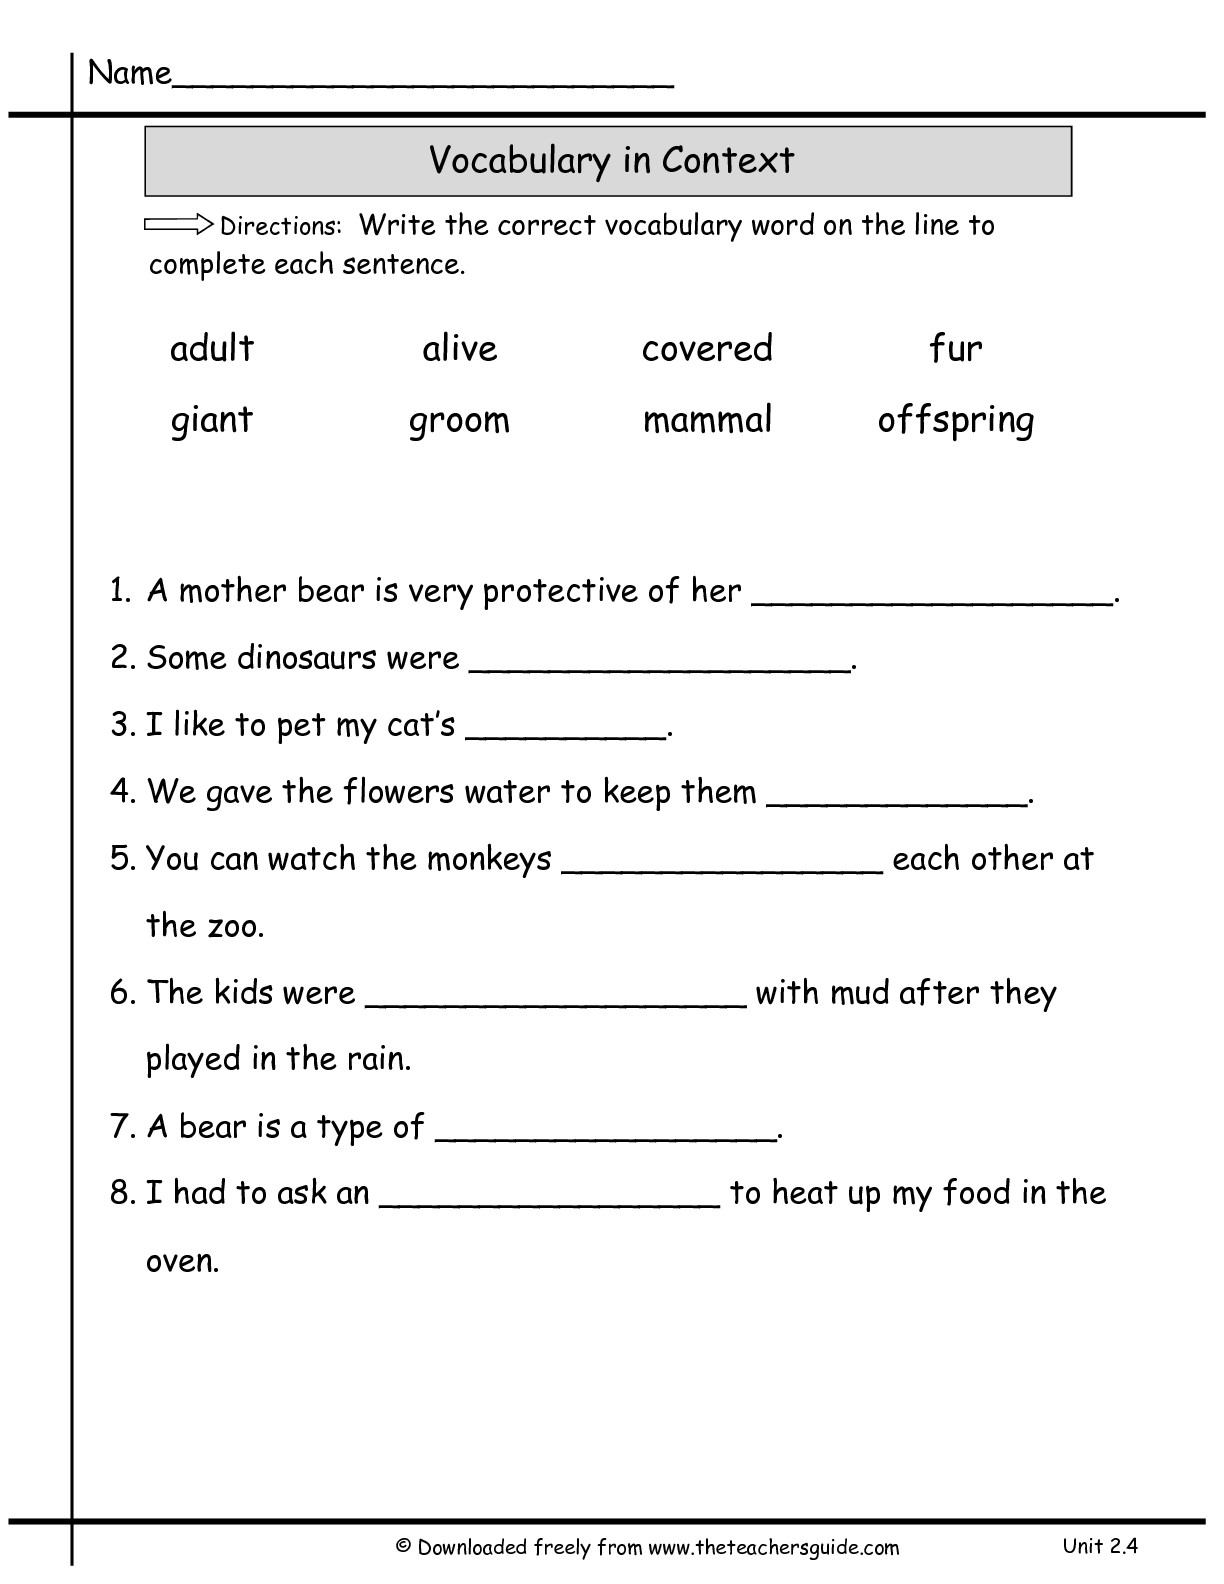 Second Grade Social Studies Worksheets Image